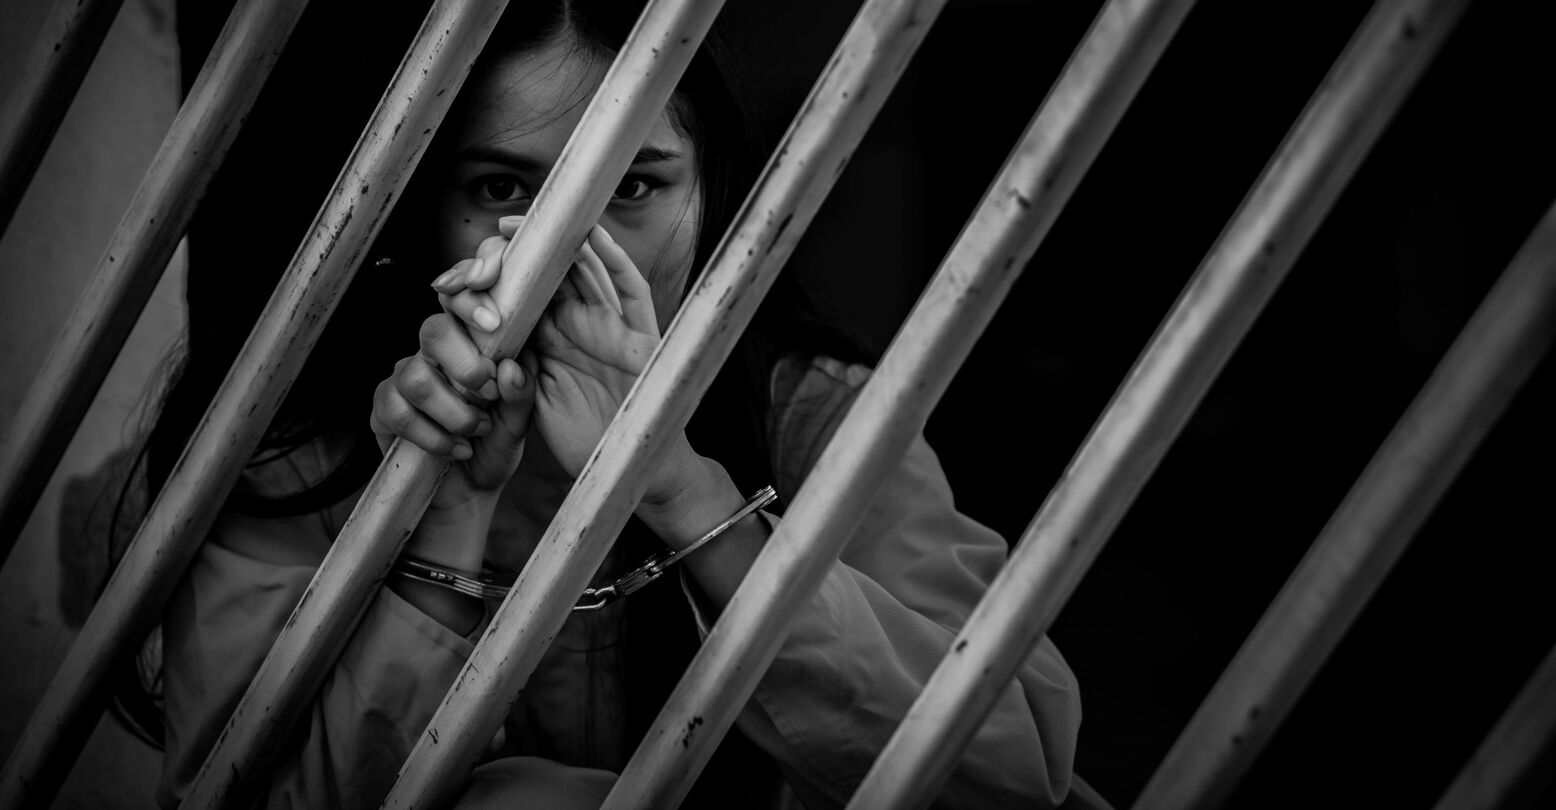 Women wearing handcuffs behind bars/imprisoned